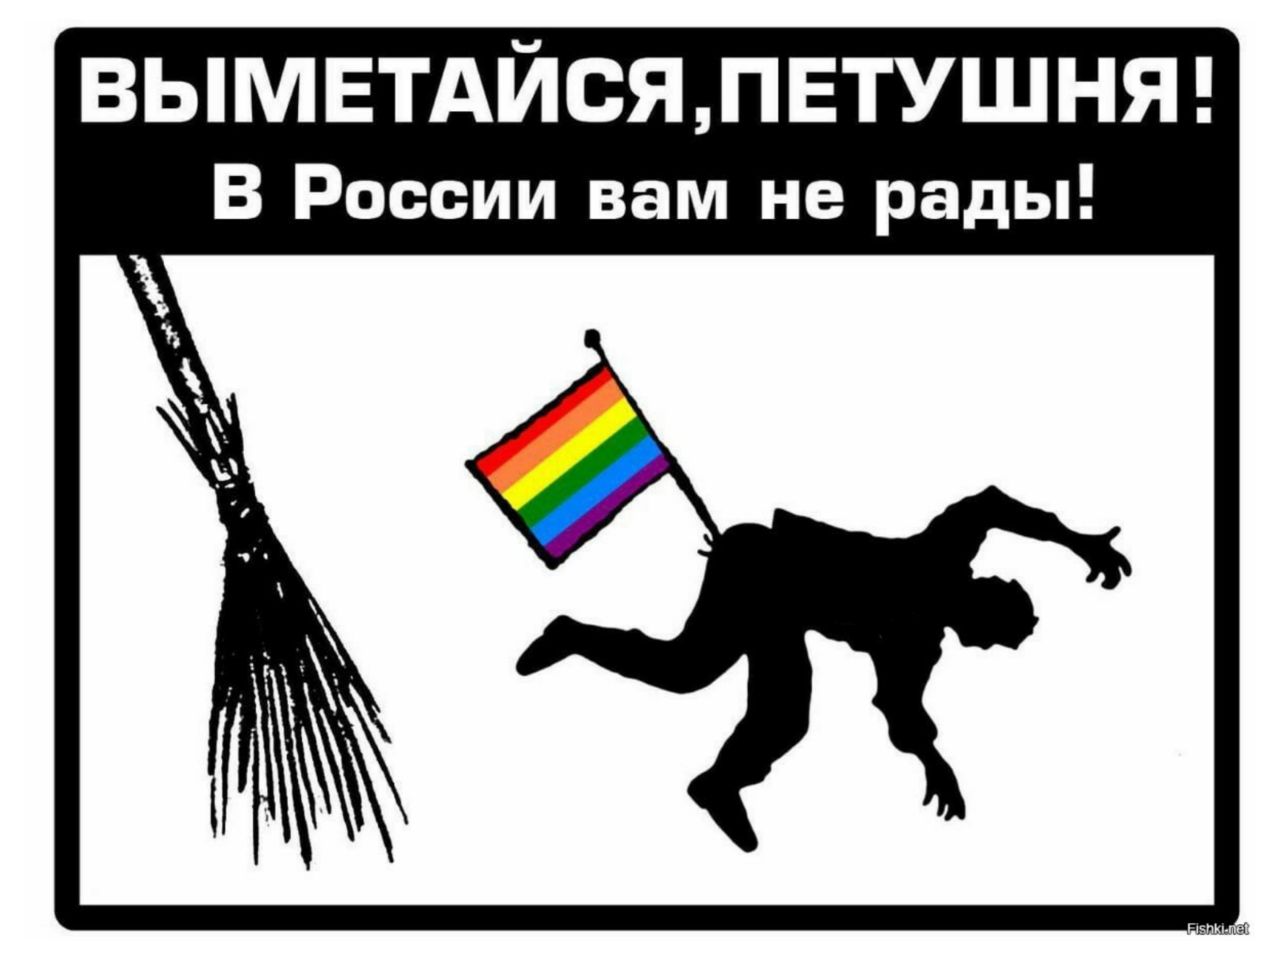 Против извращенцев. Плакат против гомосексуализма.